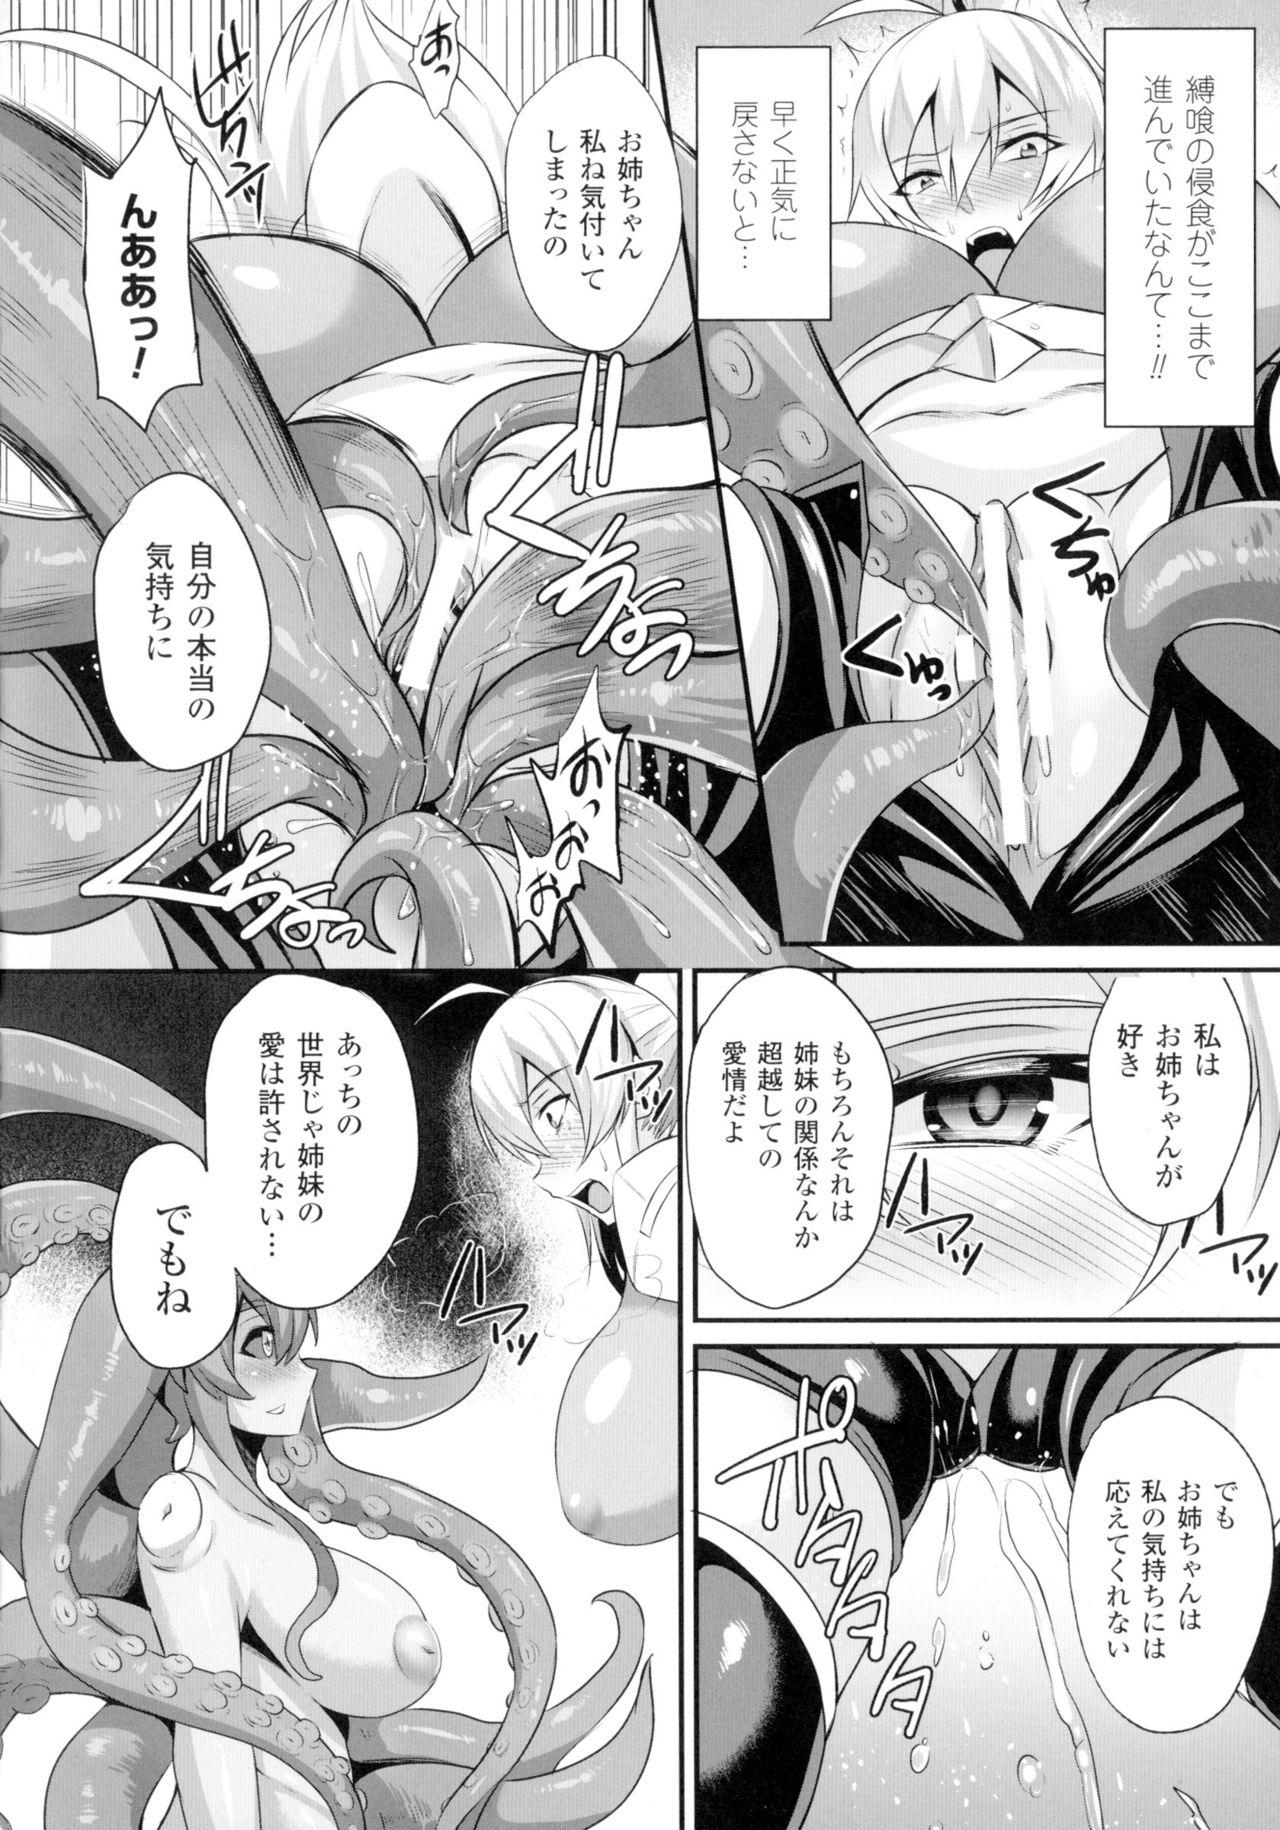 Seigi no Heroine Kangoku File DX Vol. 2 162